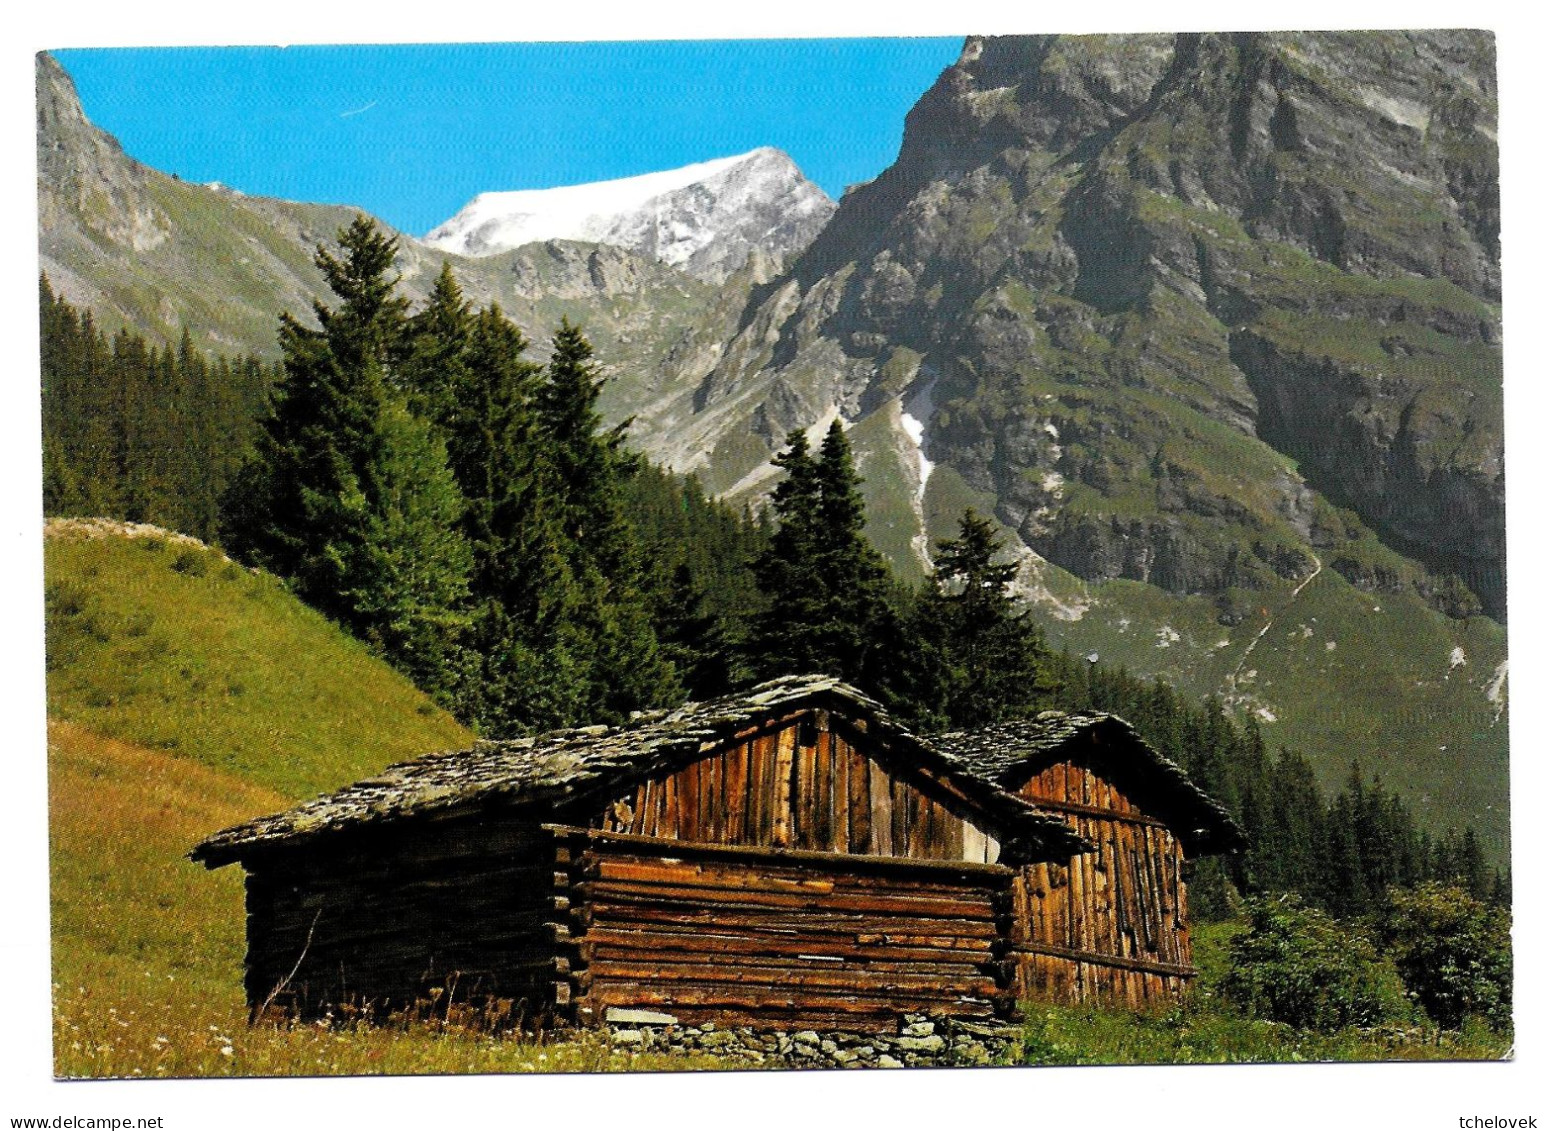 0 Regions. Rhone Alpes. Les Alpes (1) 1963 & (2) 2008 & (3) 1970 & (4) - Rhône-Alpes